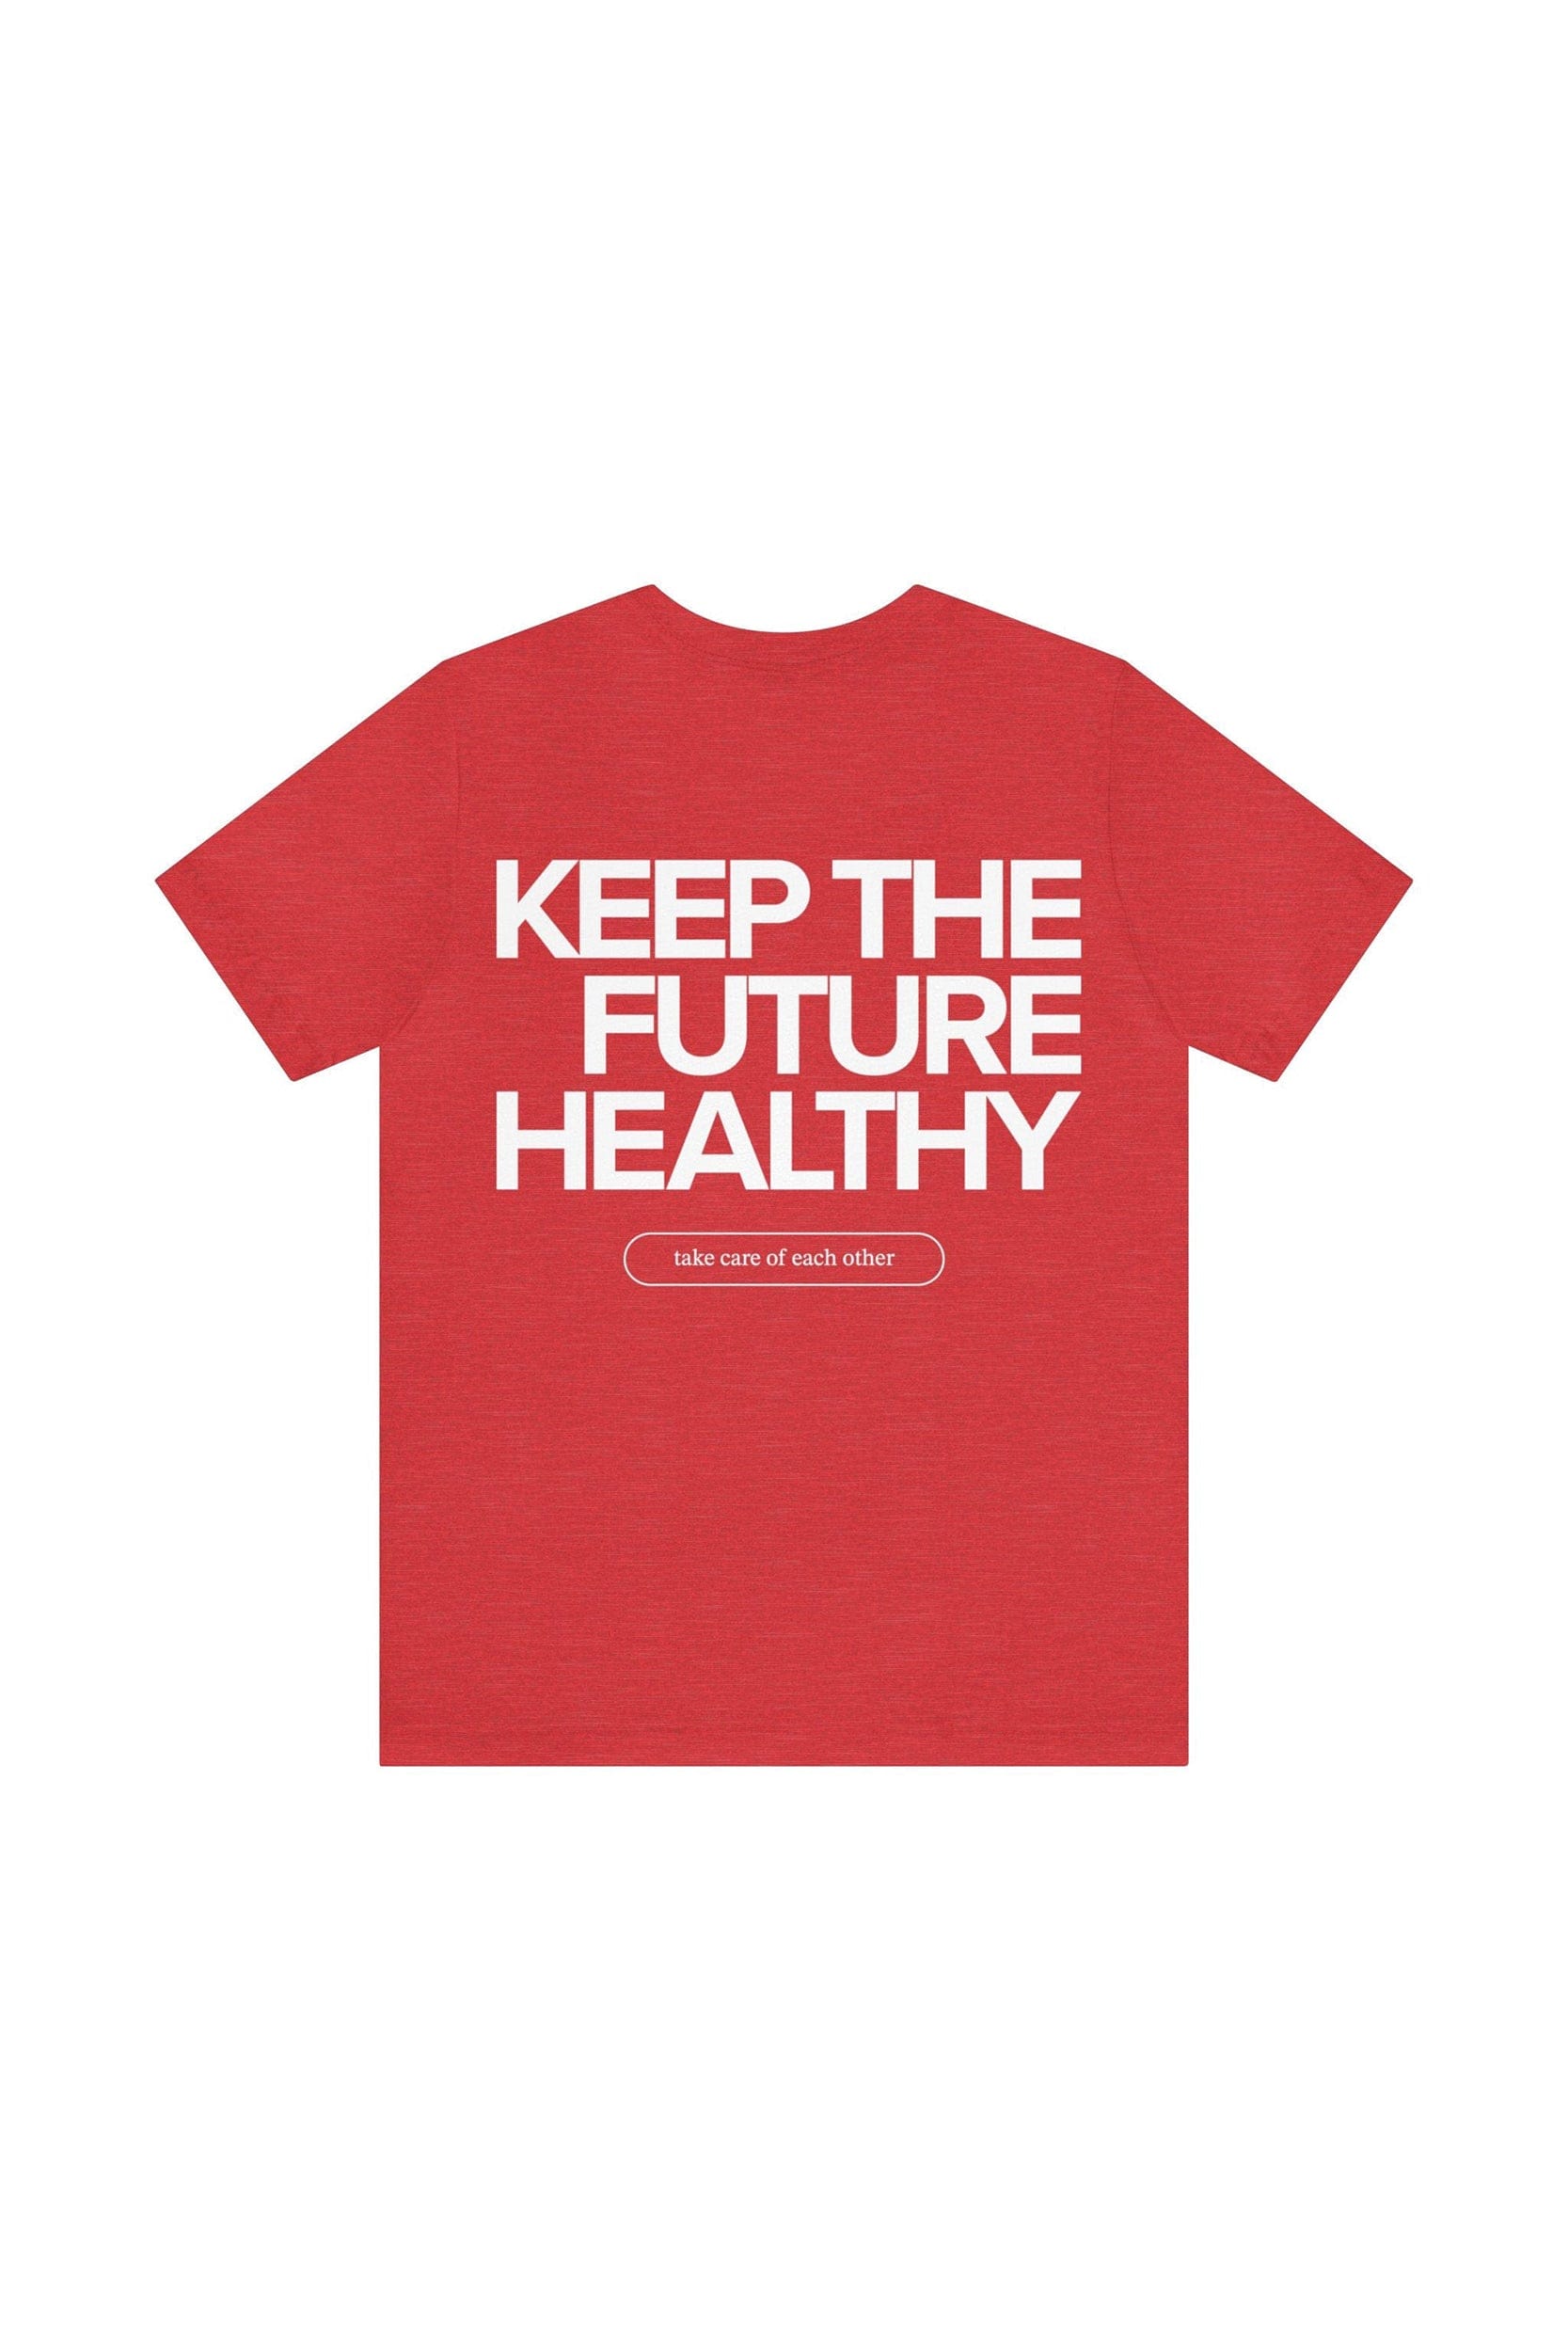 "KEEP THE FUTURE HEALTHY" T-Shirt